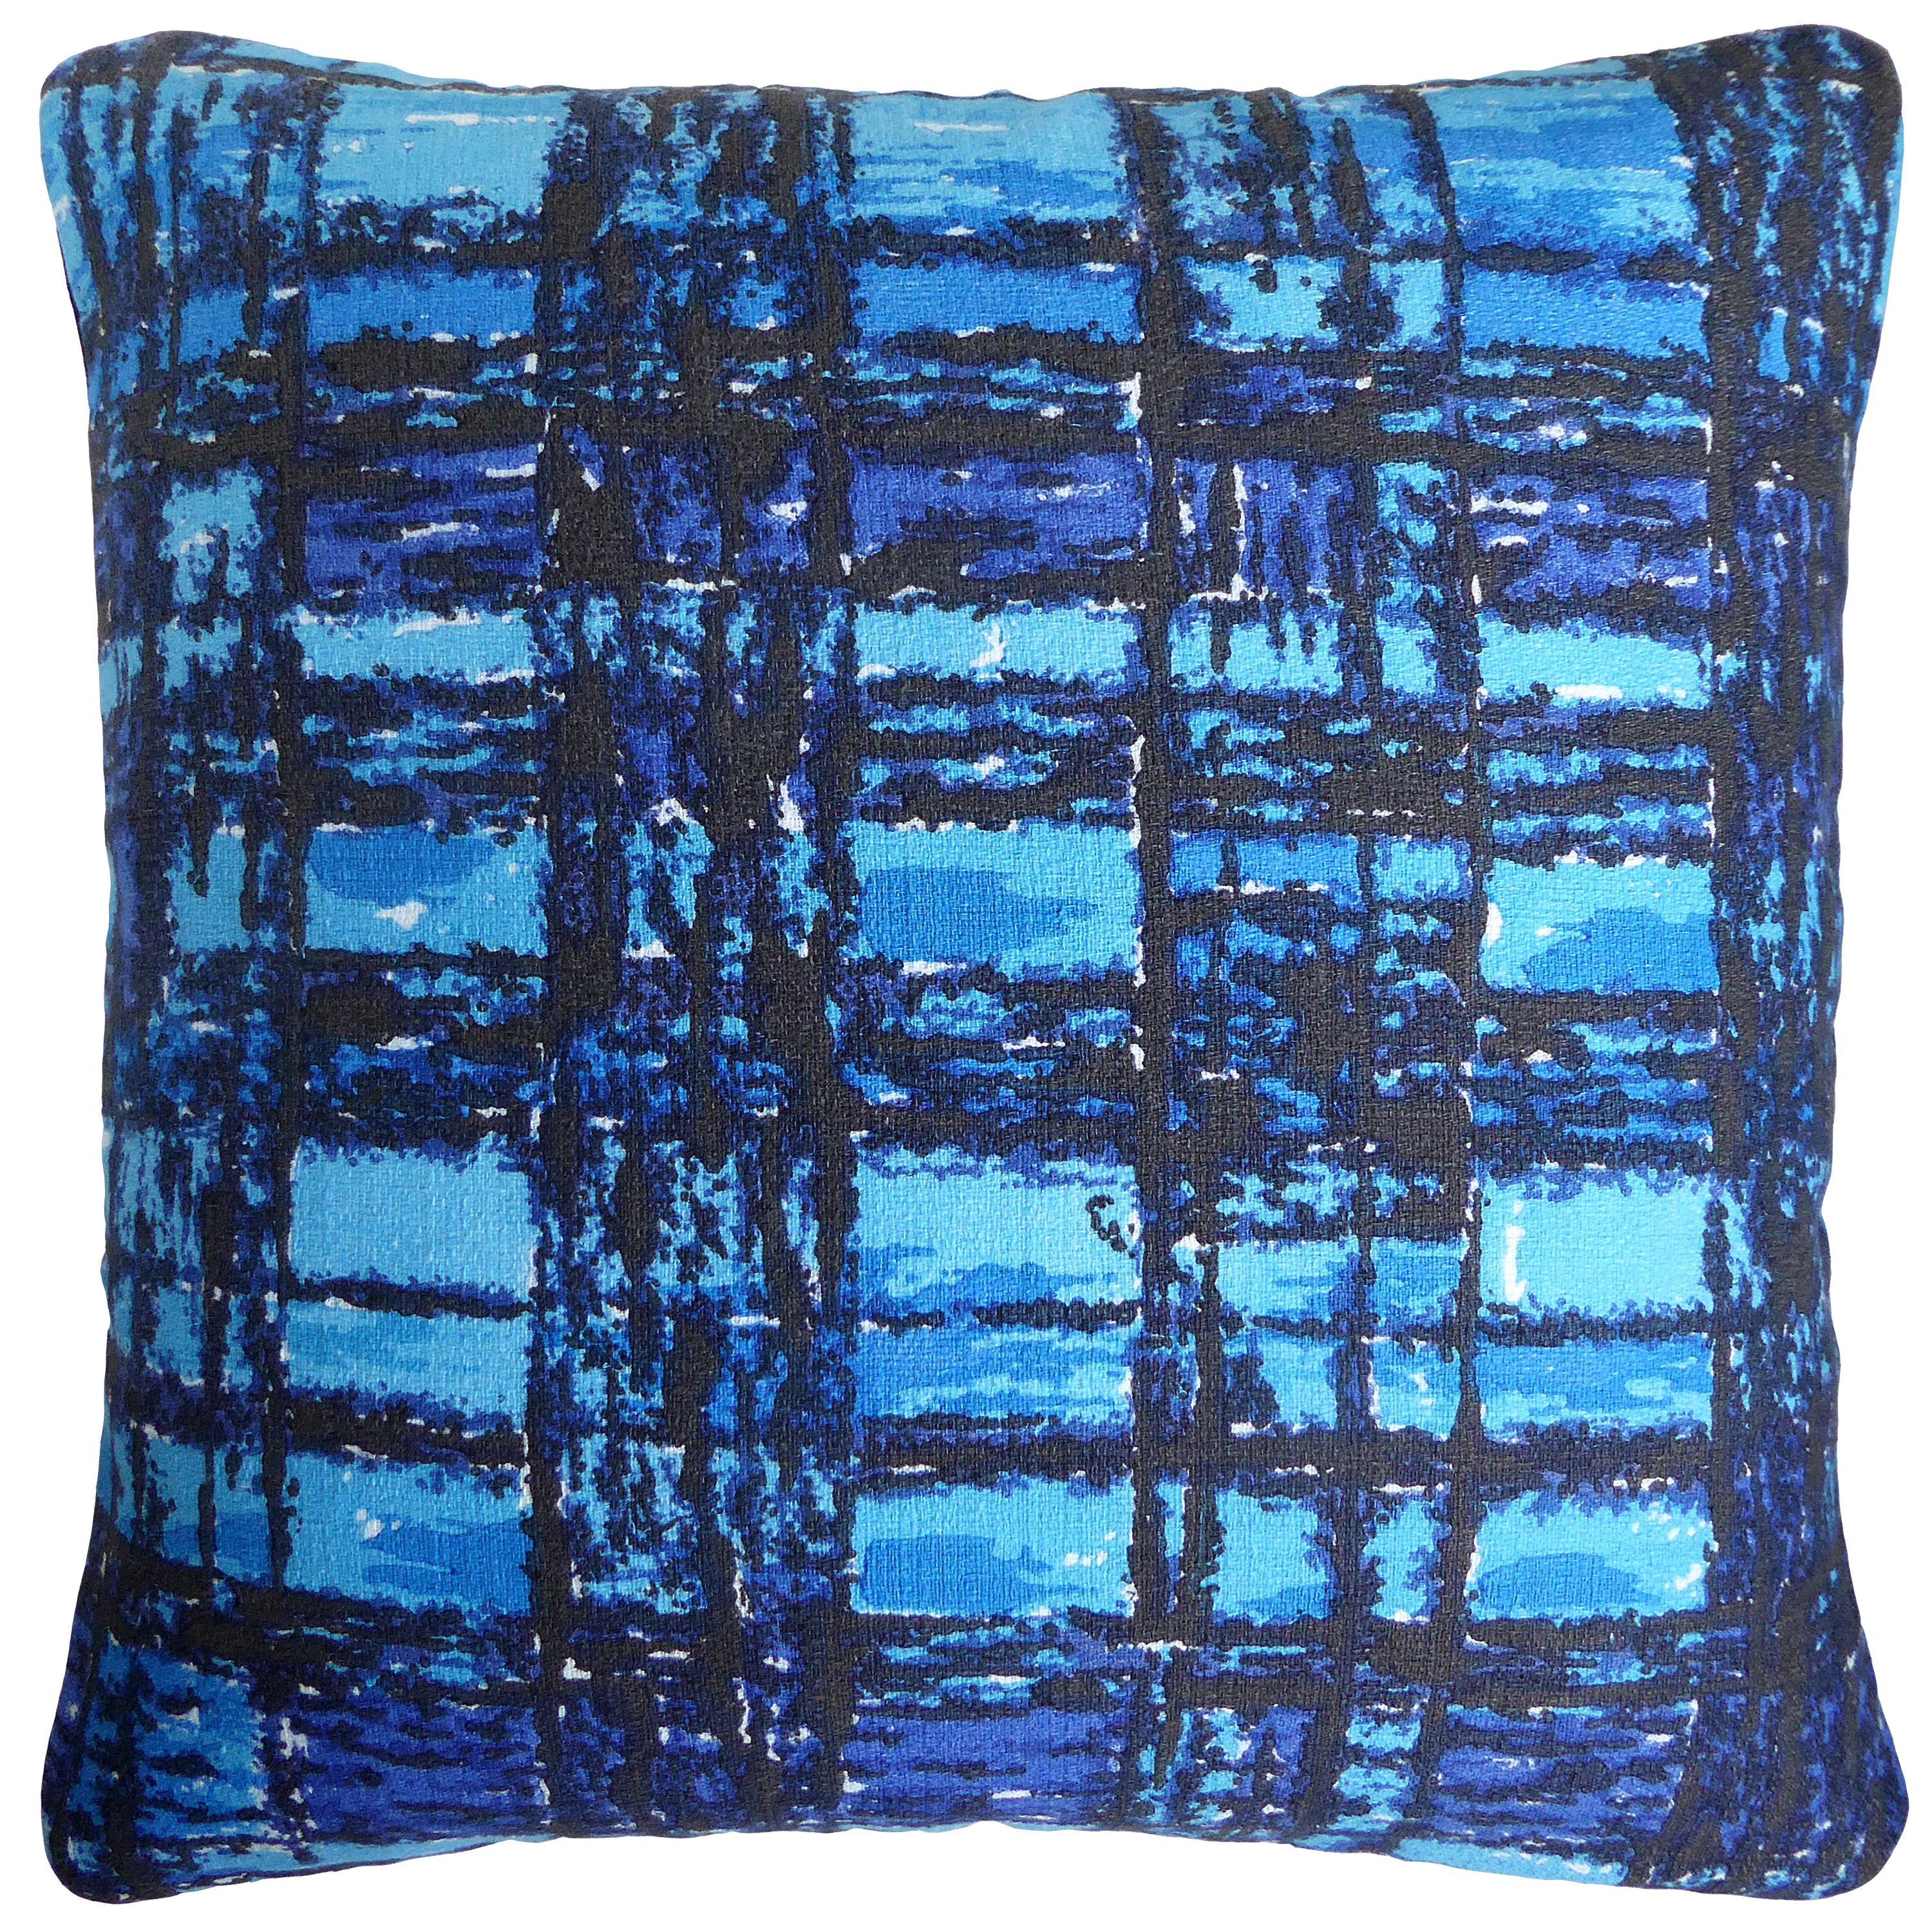 ‘Vintage Cushions’ Bespoke-Made Midcentury Pillow ‘Nicholls Checks' Made in UK